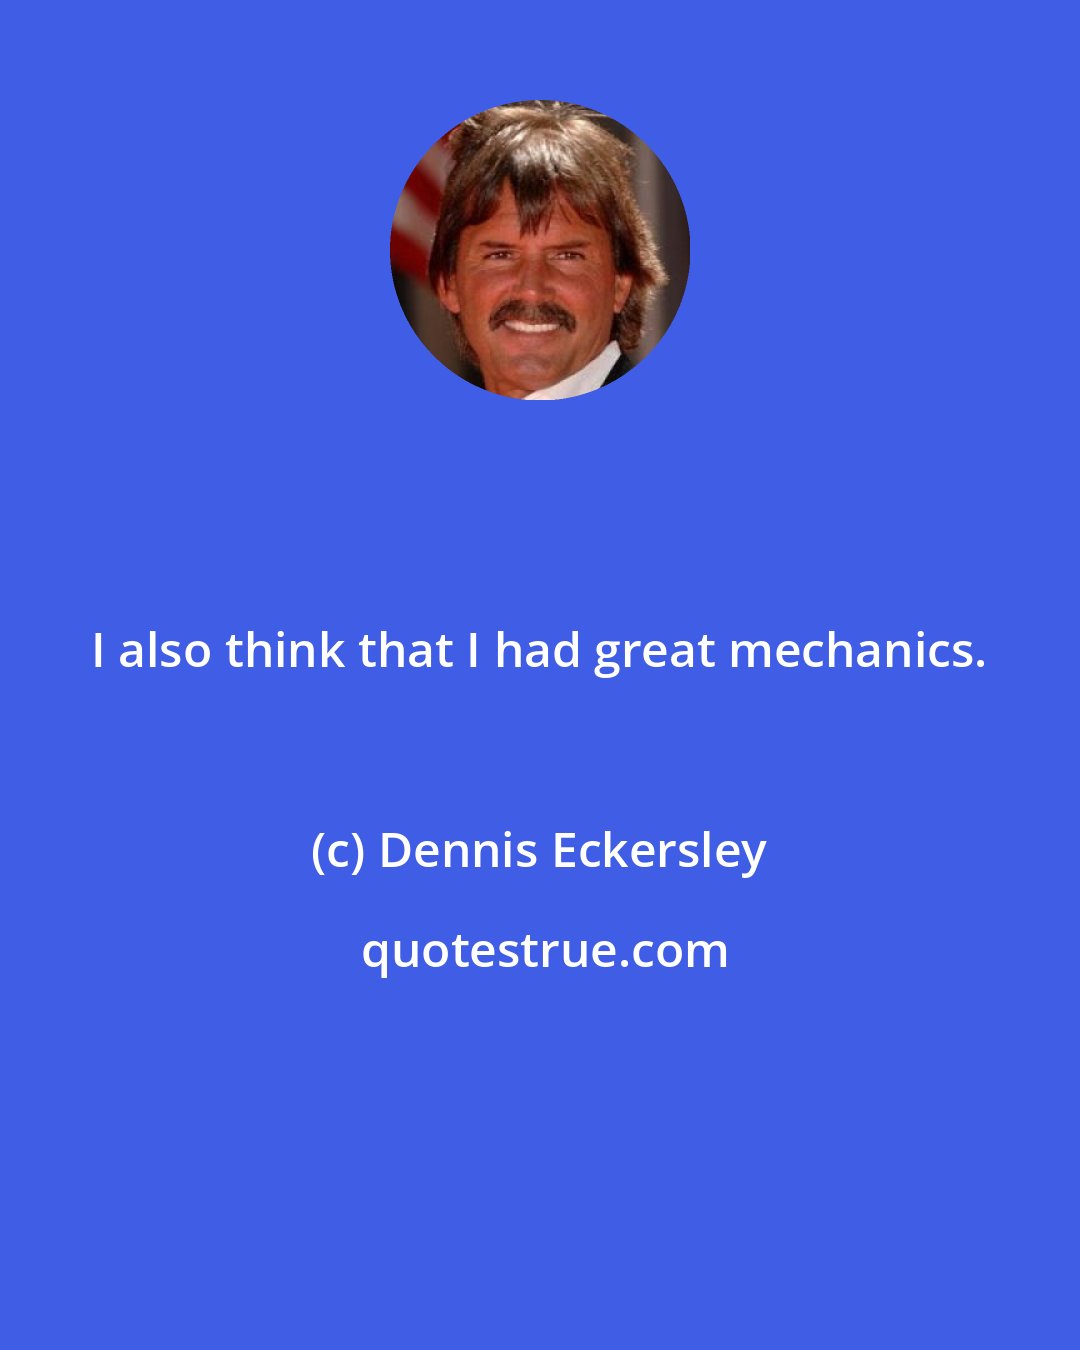 Dennis Eckersley: I also think that I had great mechanics.